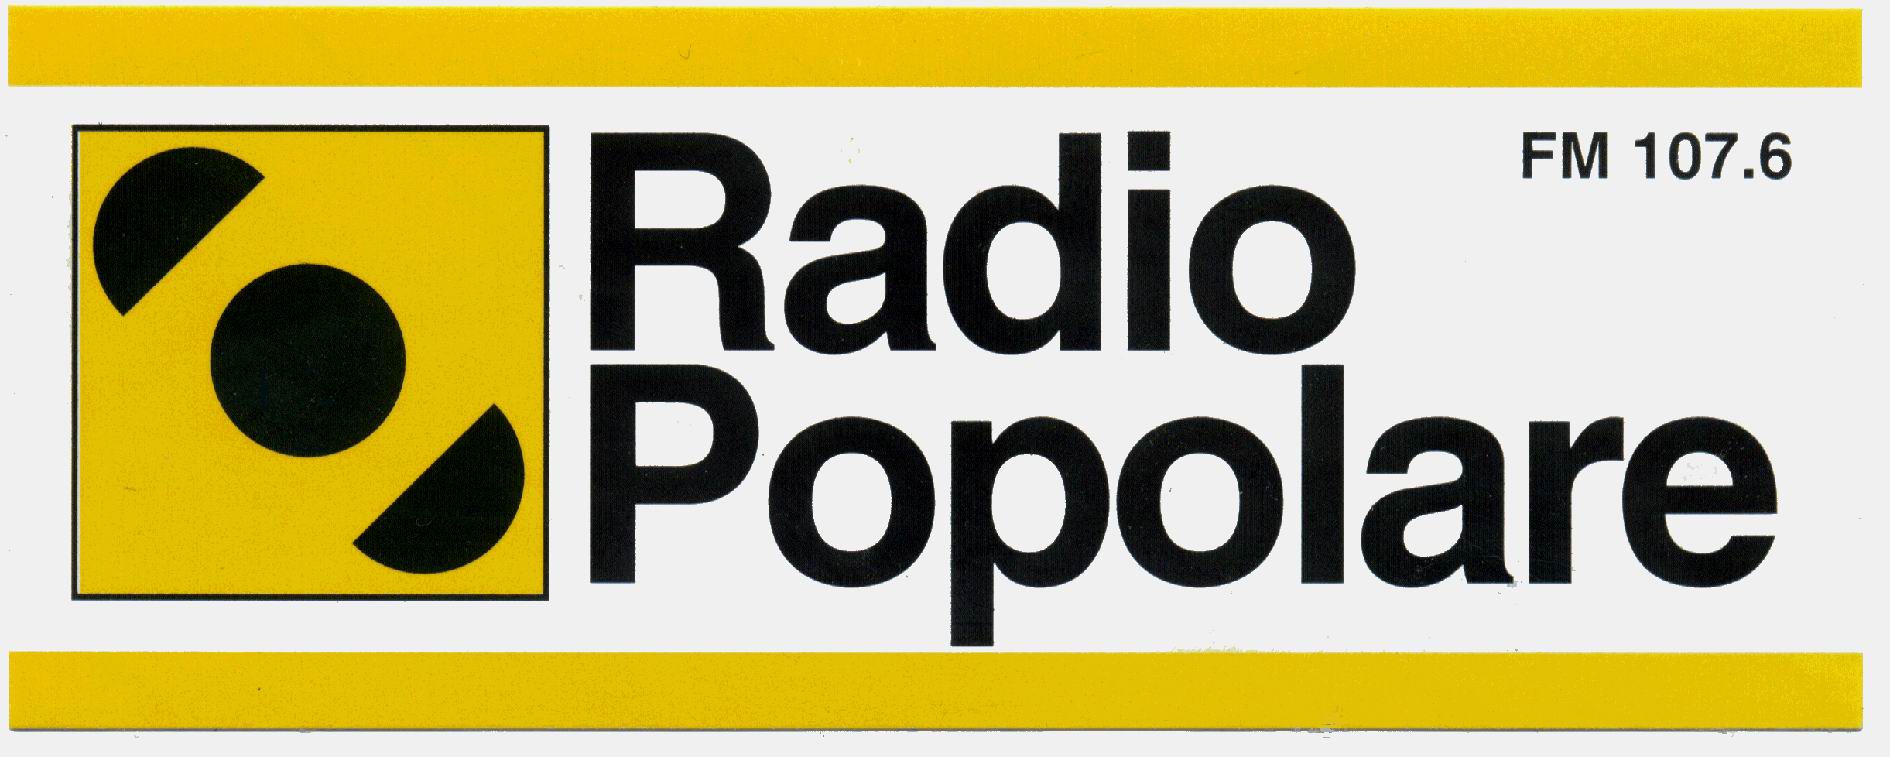 logo Radio Popolare